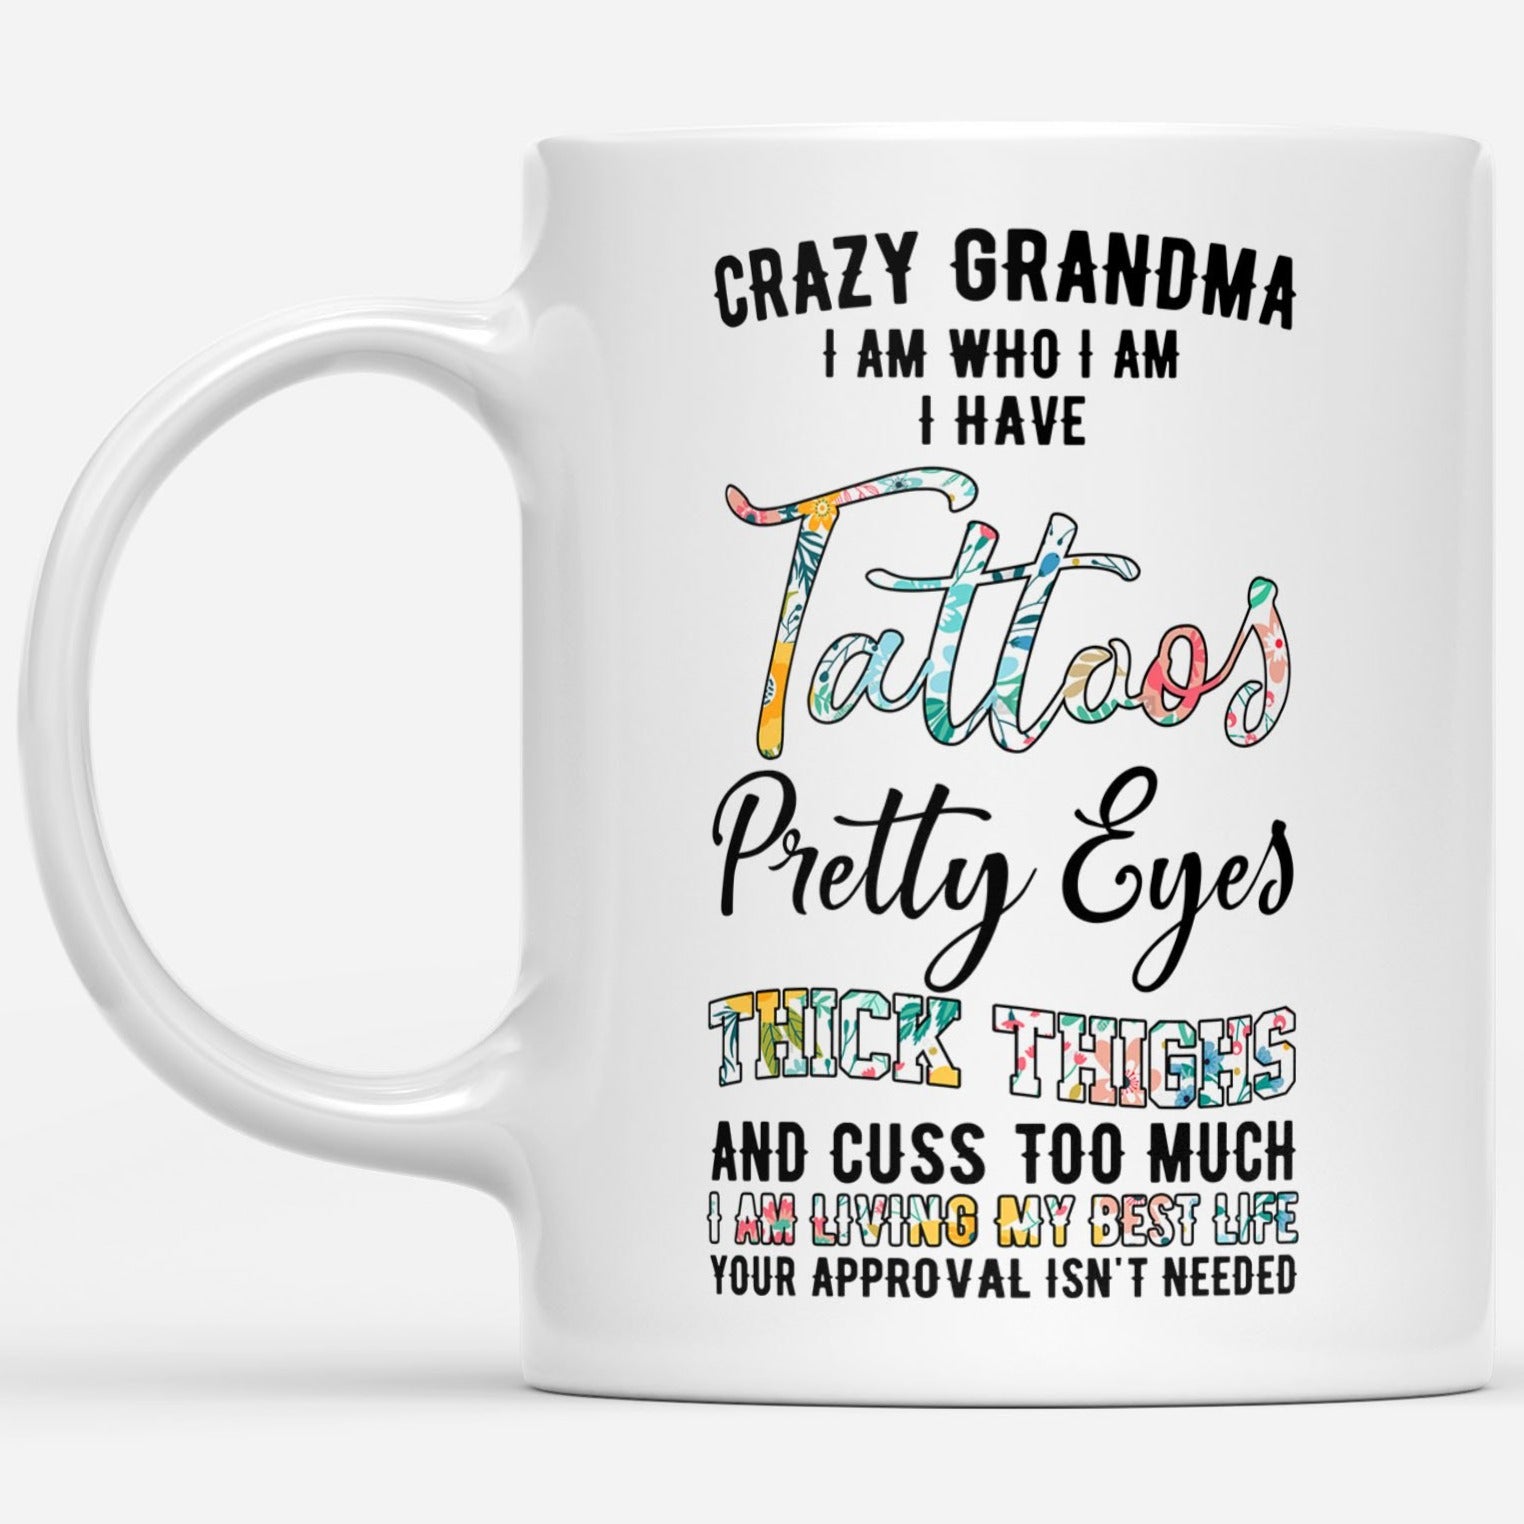 Crazy Grandma I Am Who I Am I Have Tattoos Pretty Eyes Living My Best Life Gift Ideas For Grandma And Women B DS White Mug